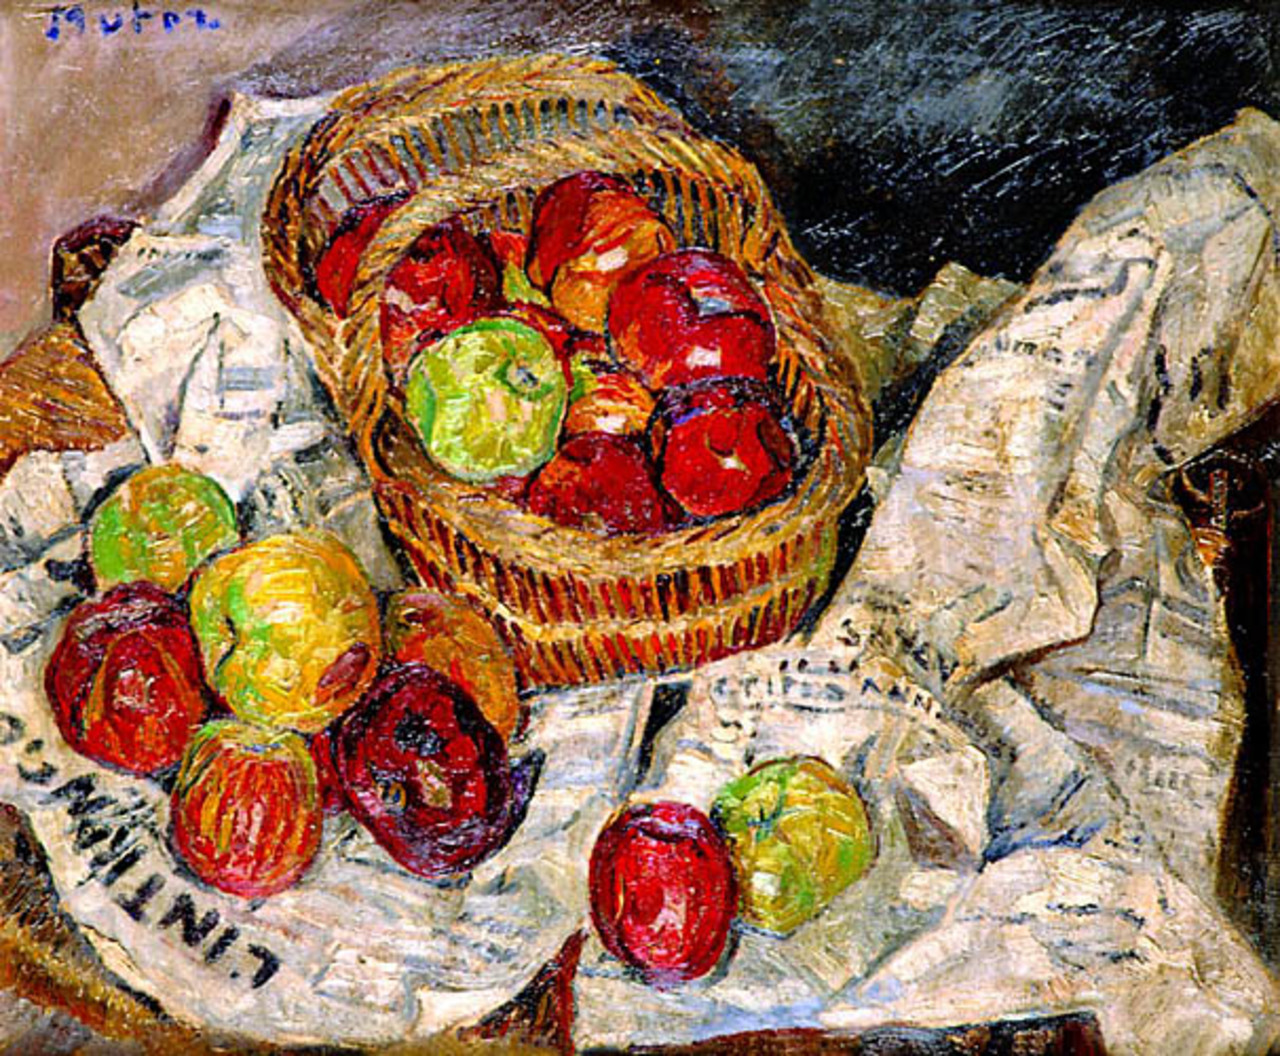 Mela Muter (1976-1967), "Martwa natura z koszykiem jabłek", lata 1920-1925, źródło: Polswiss Art